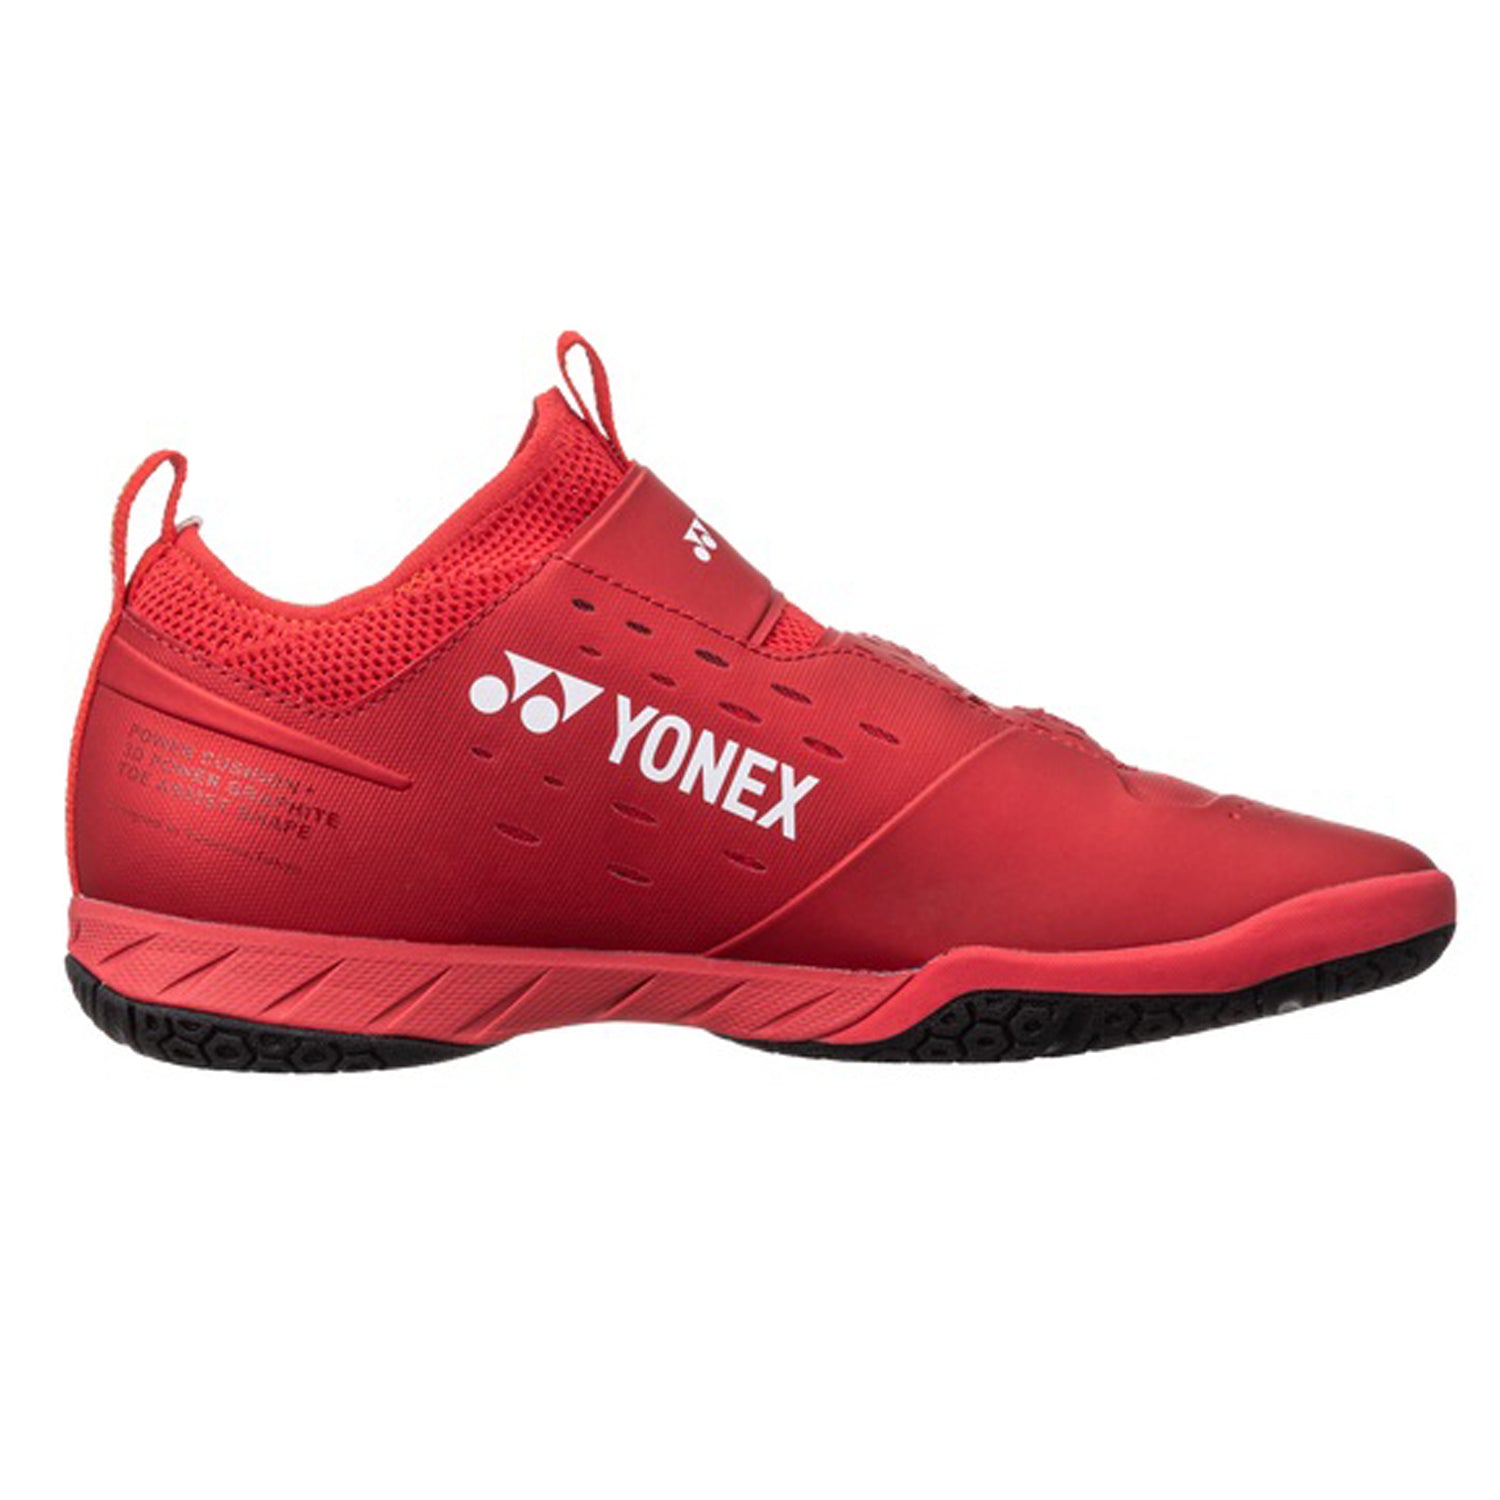 Yonex SHB Infinity 2 EX Power Cushion Badminton Shoes - Best Price online Prokicksports.com